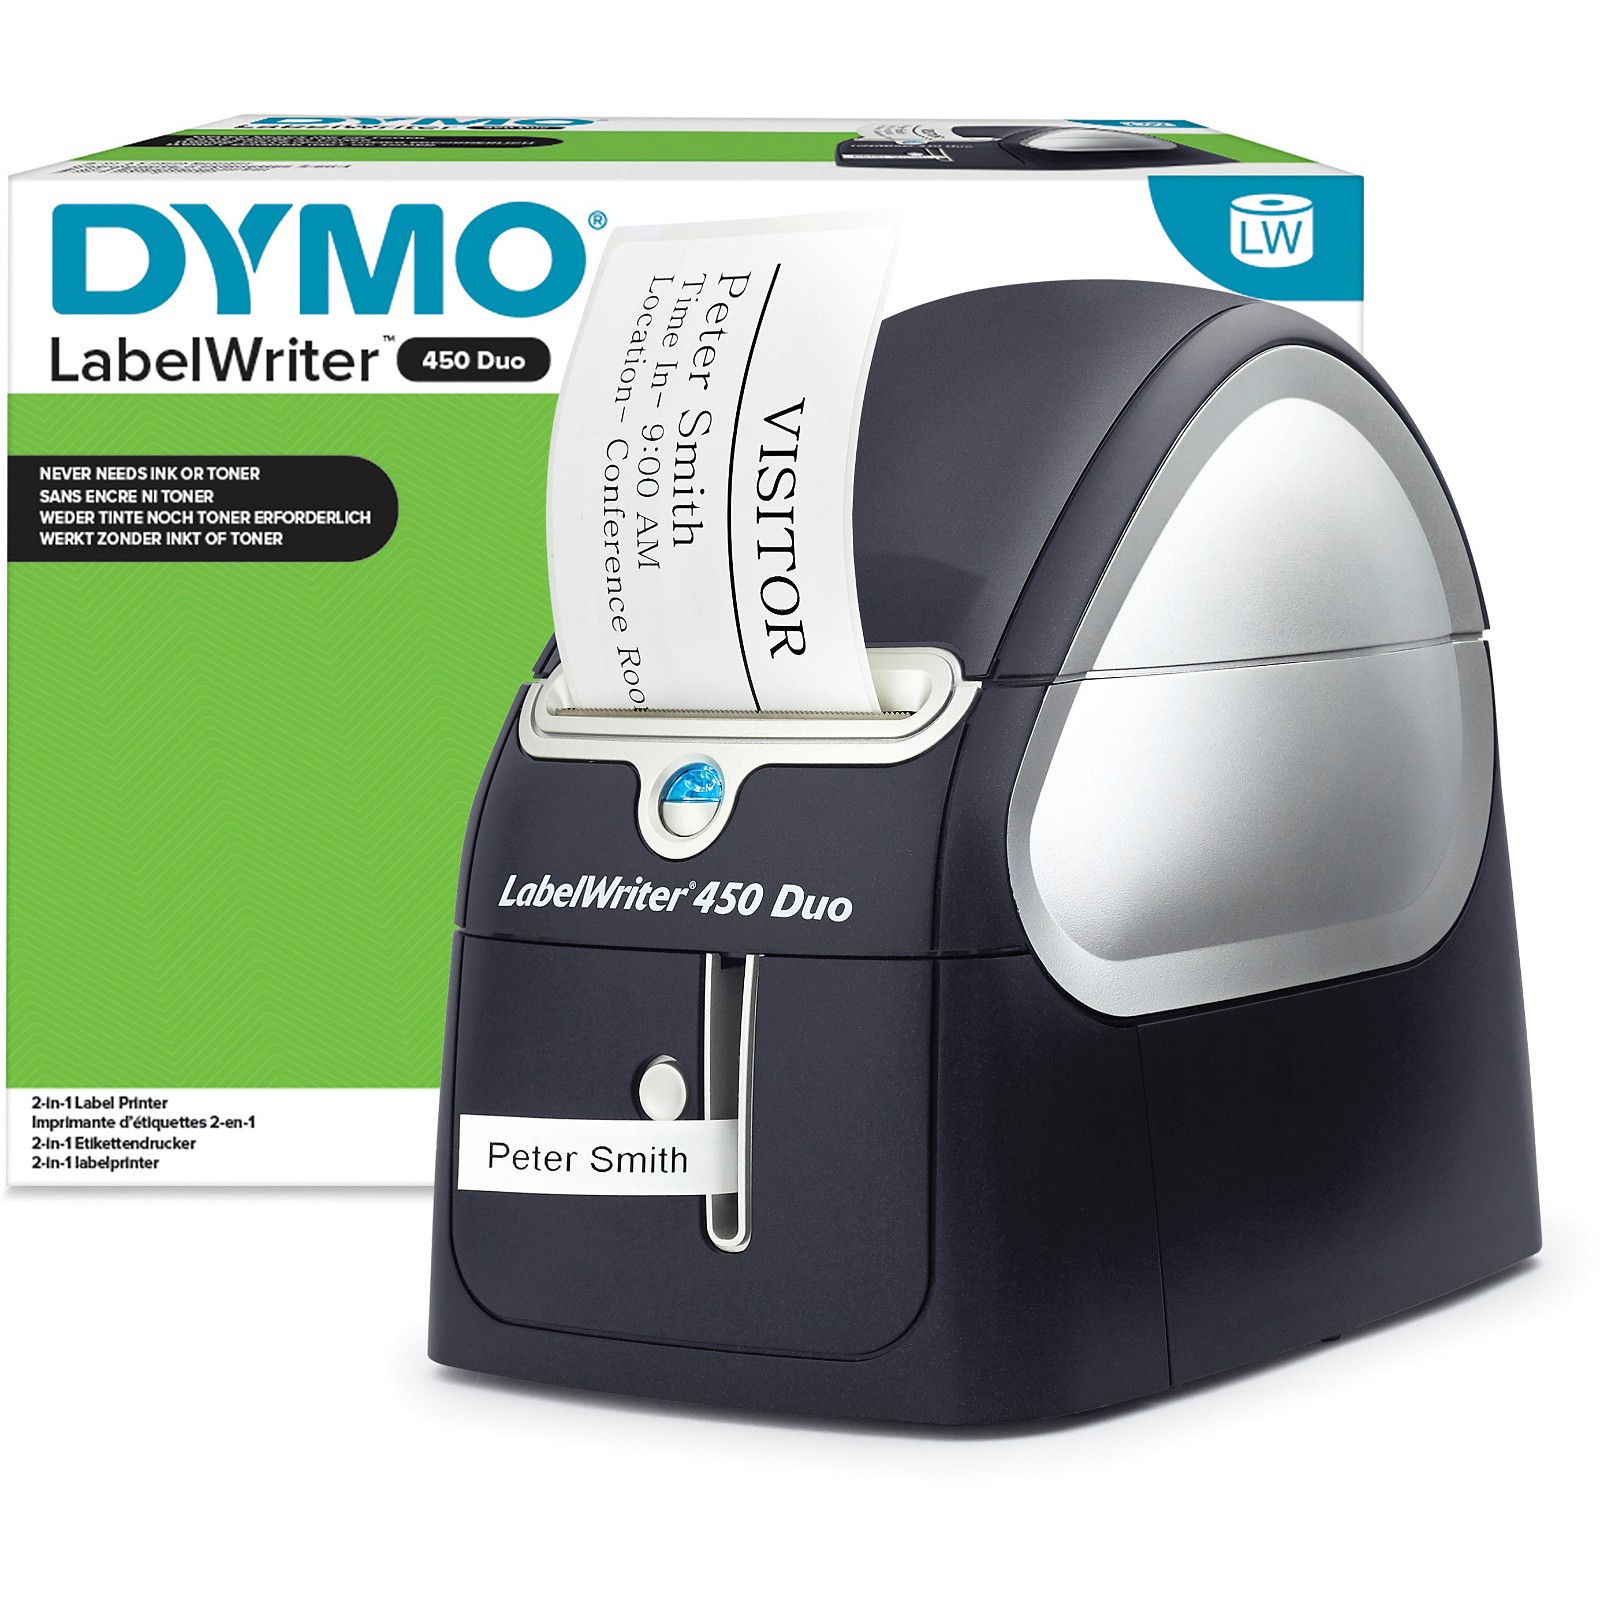 Dymo LabelWriter 450 Duo labelprinter